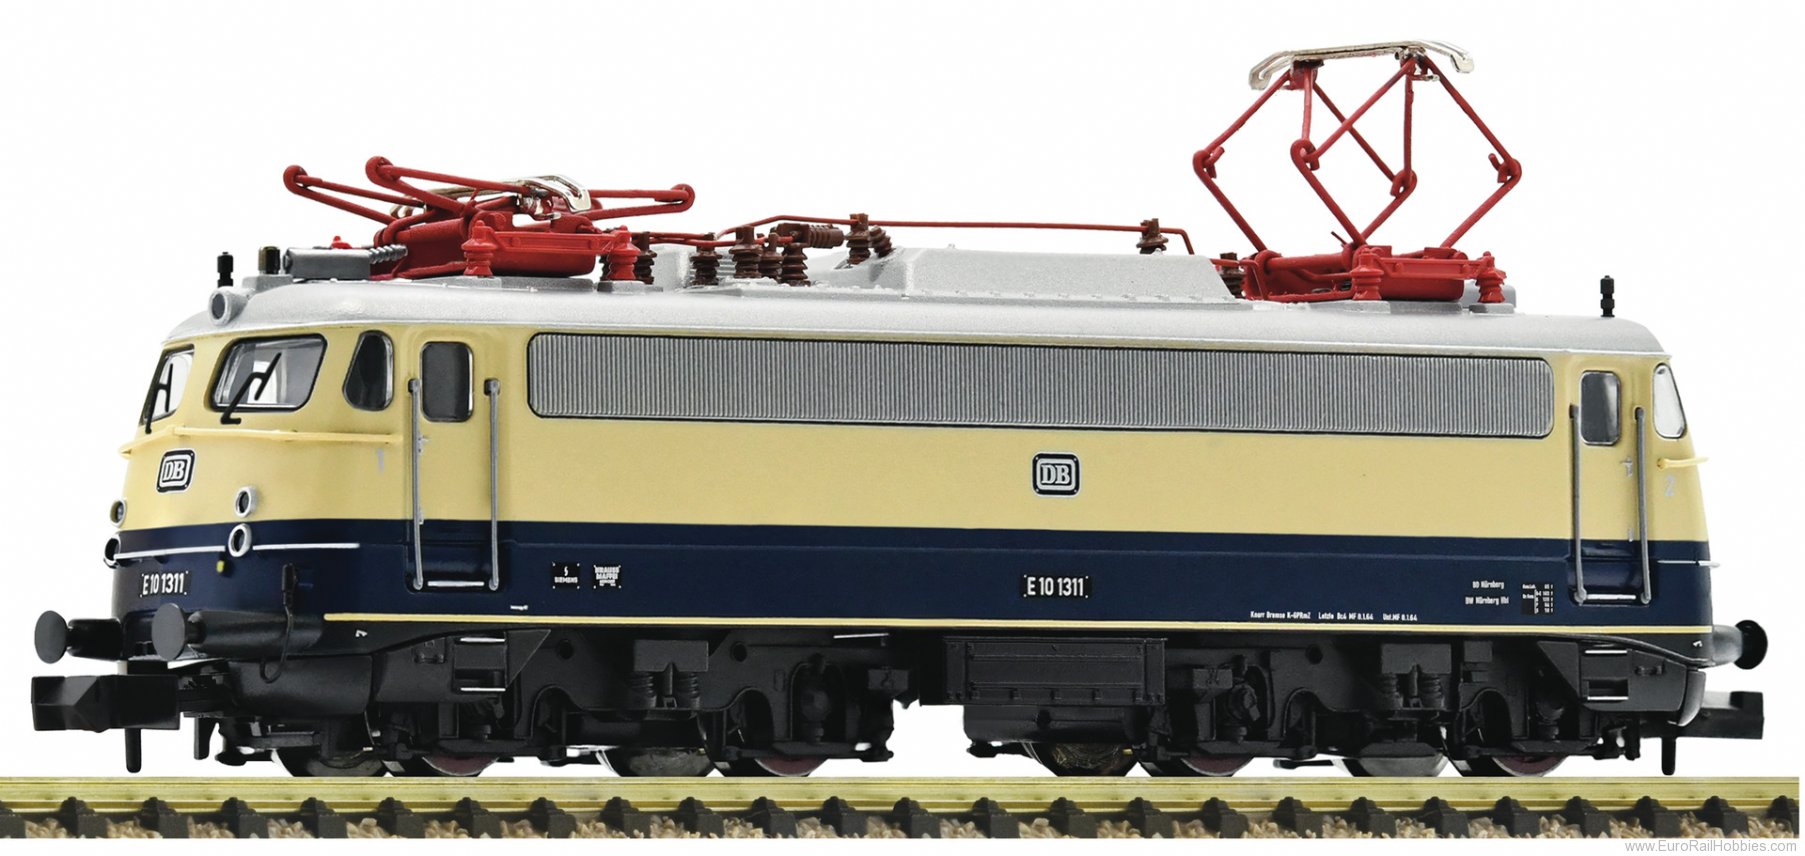 Fleischmann 733809 DB E10 1311 Electric locomotive